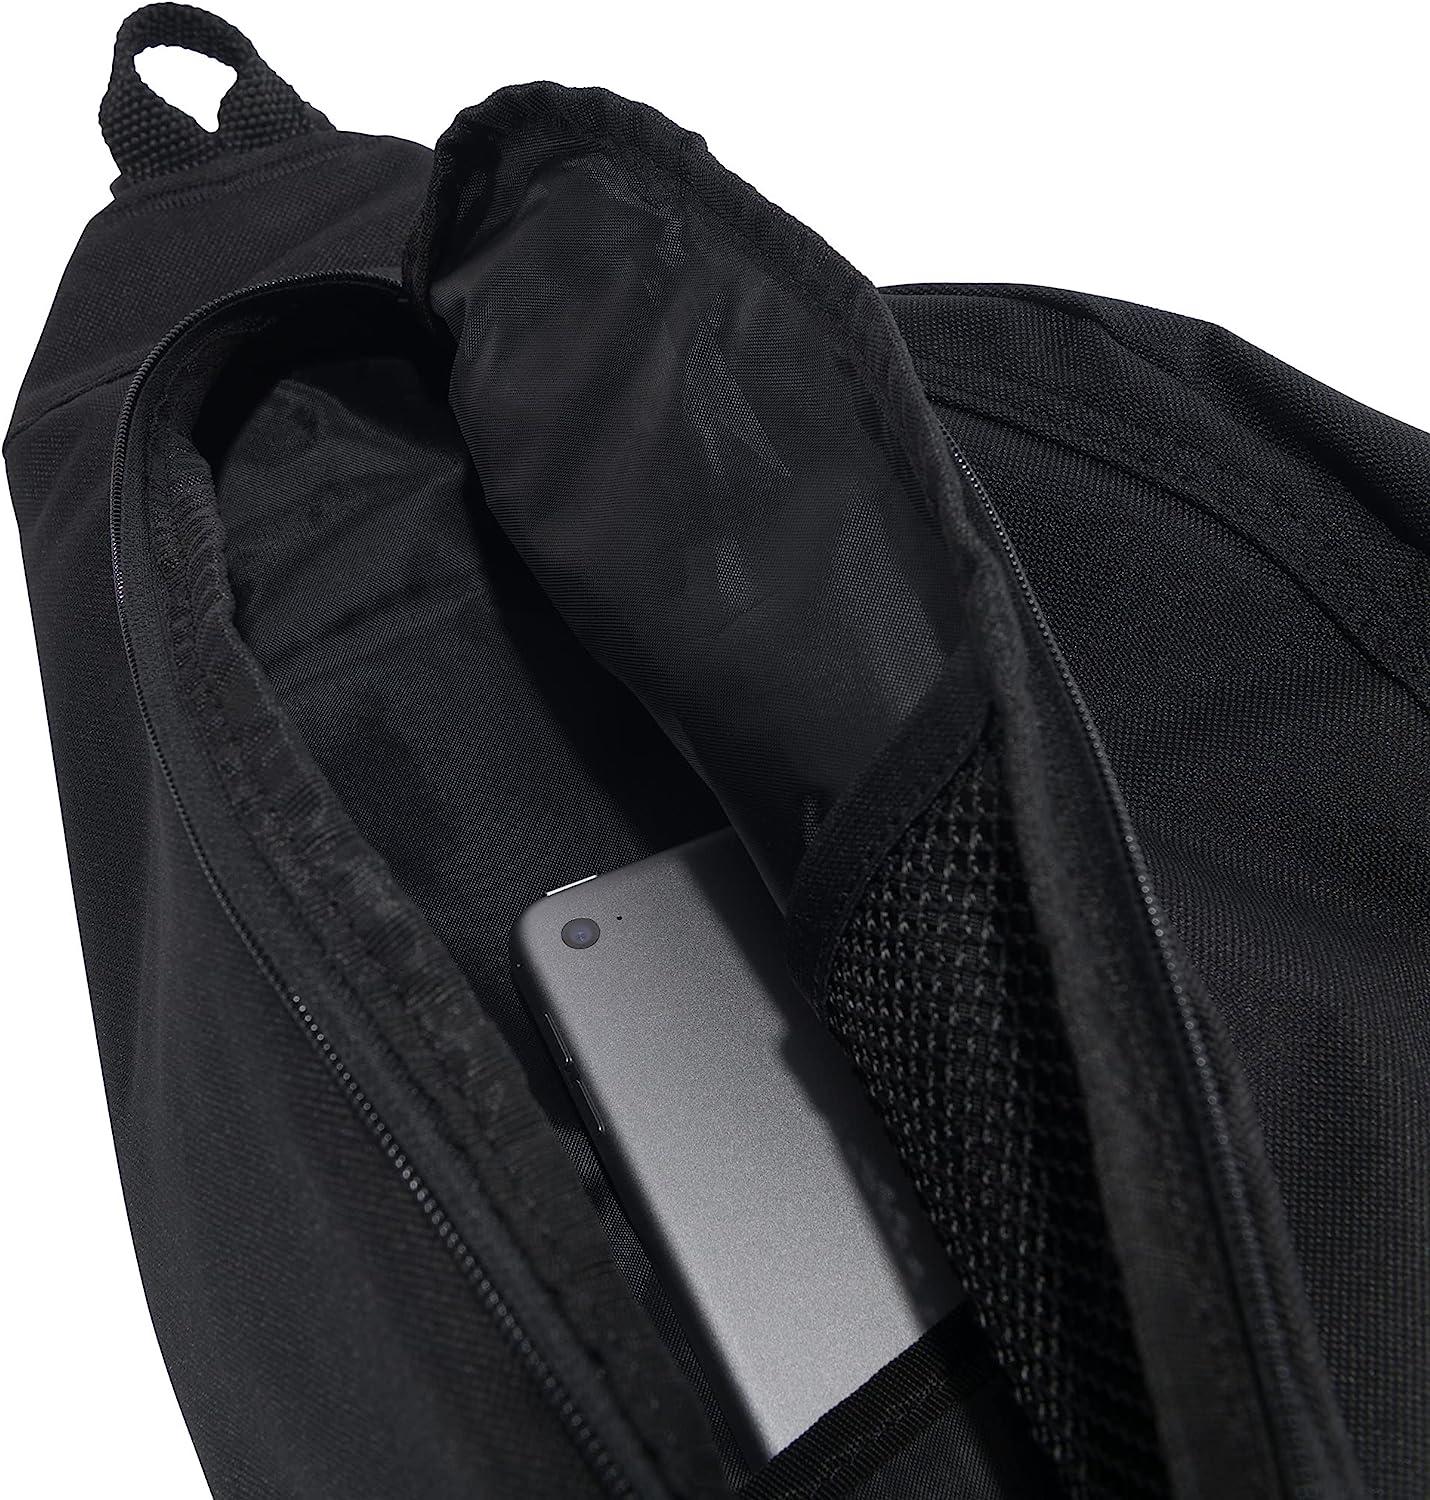 Carhartt Sling Bag - Accessories